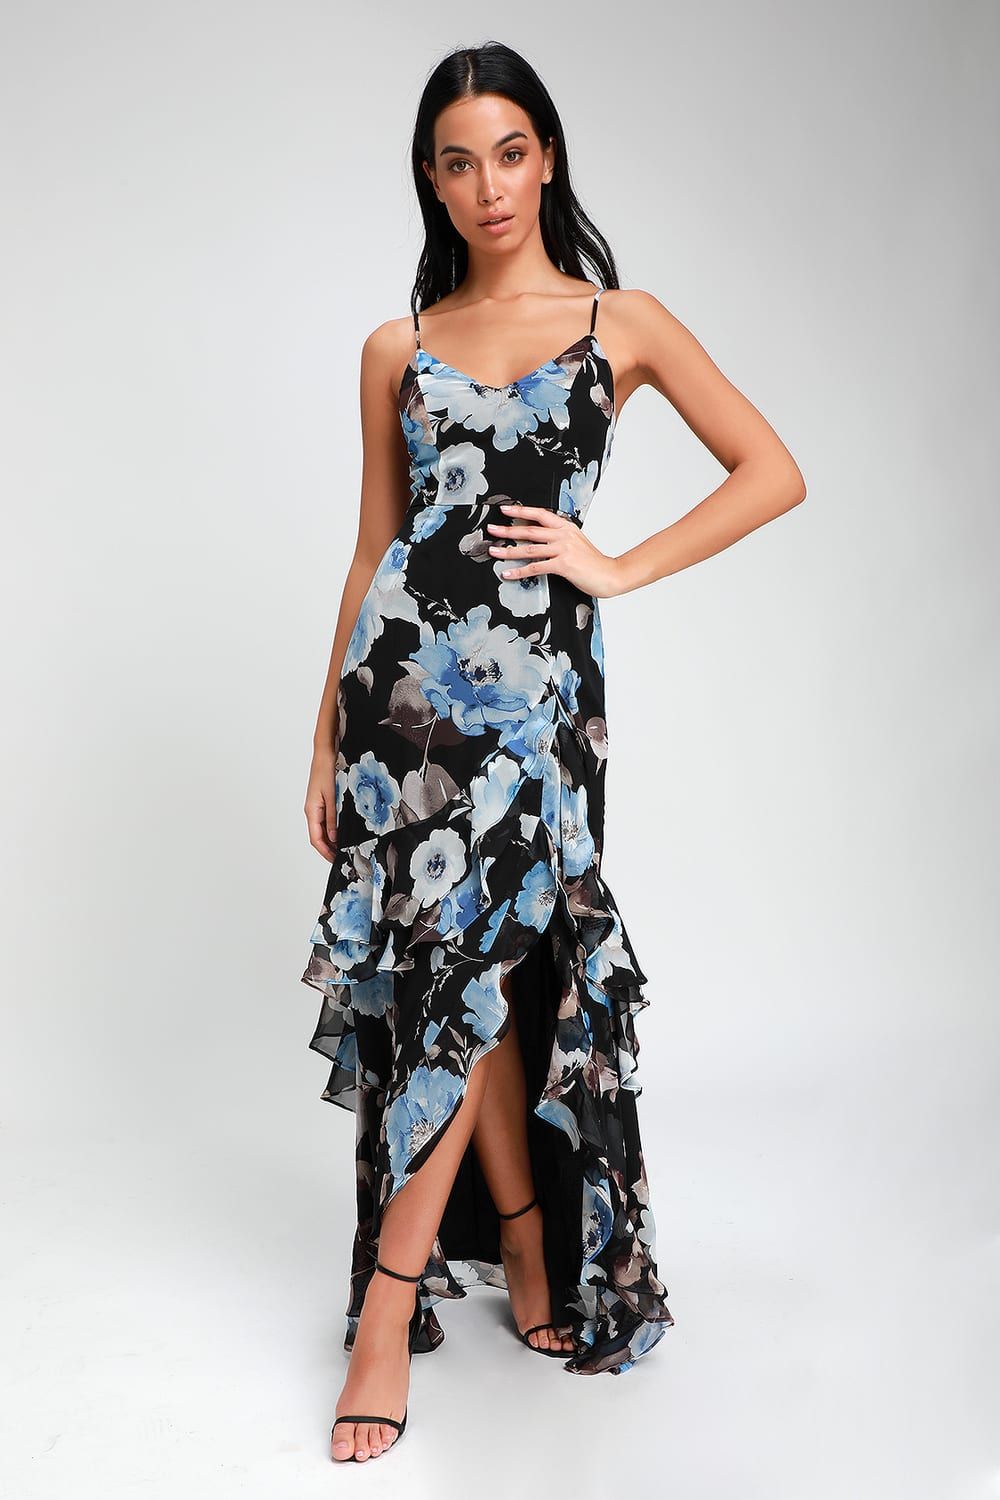 Artwin Black Floral Print Ruffled High-Low Maxi Dress | Lulus (US)